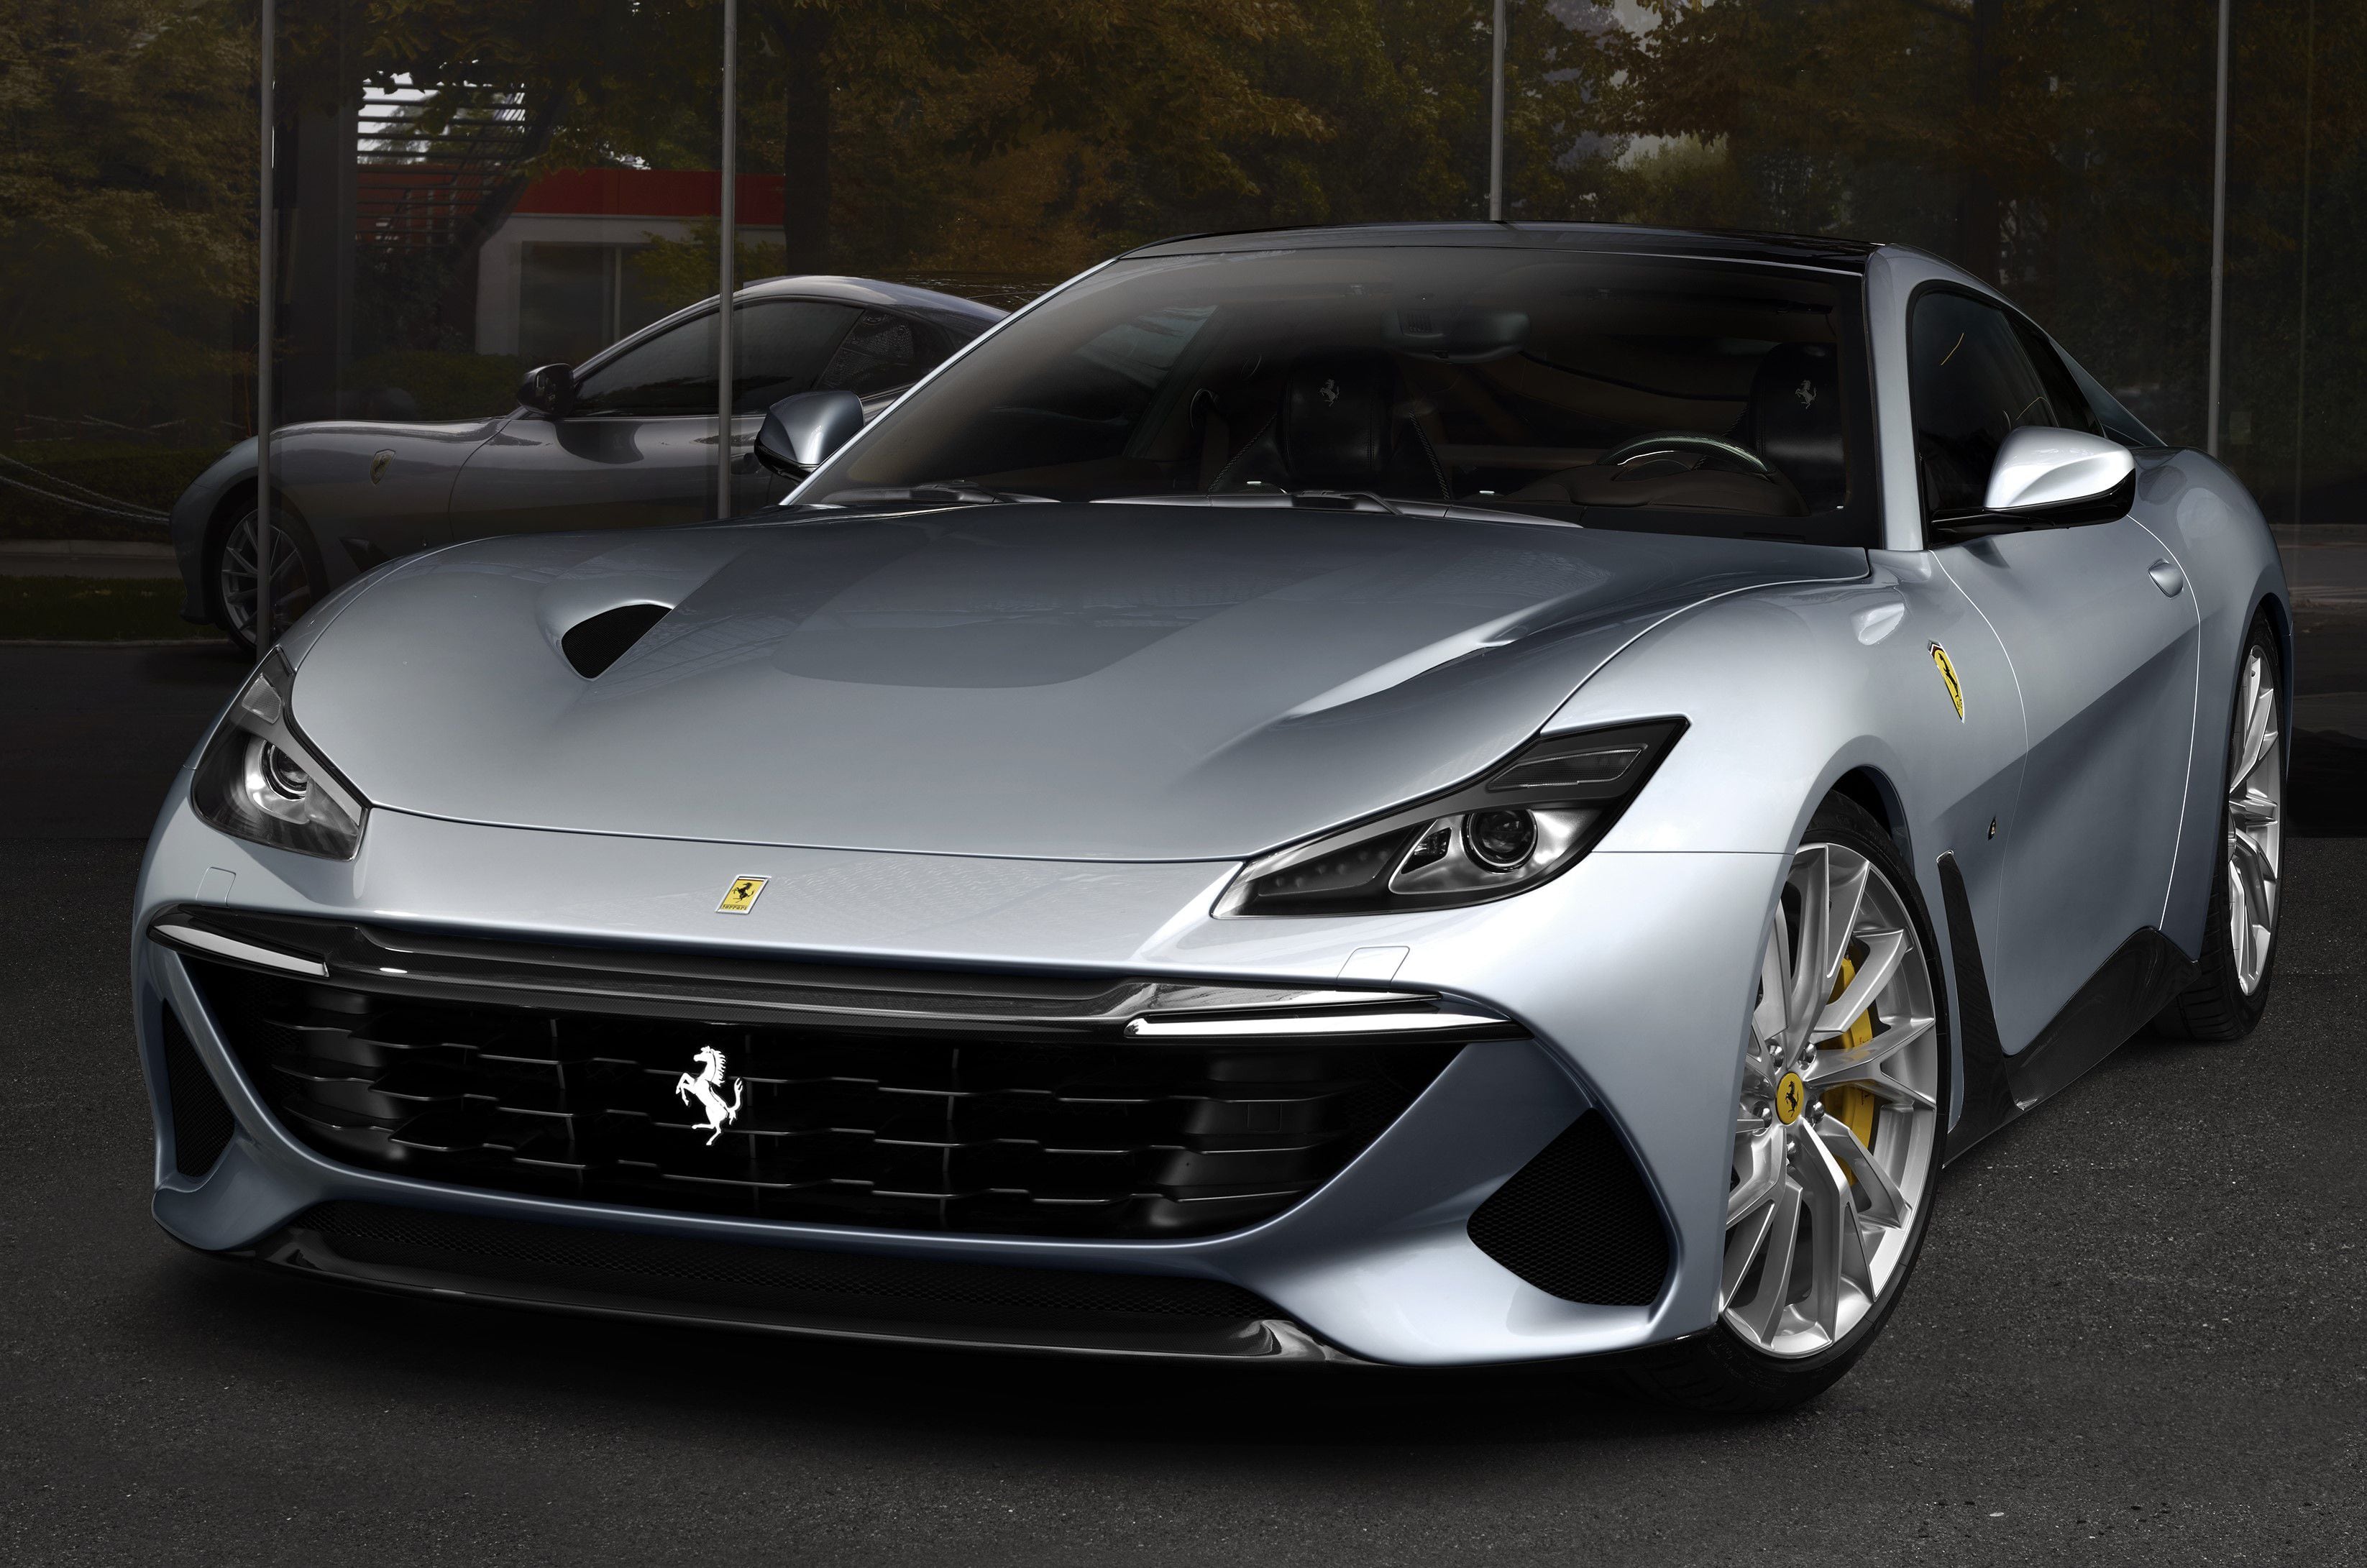 Ferrari Has Created 12 Custom Colors Inspired By The Italian